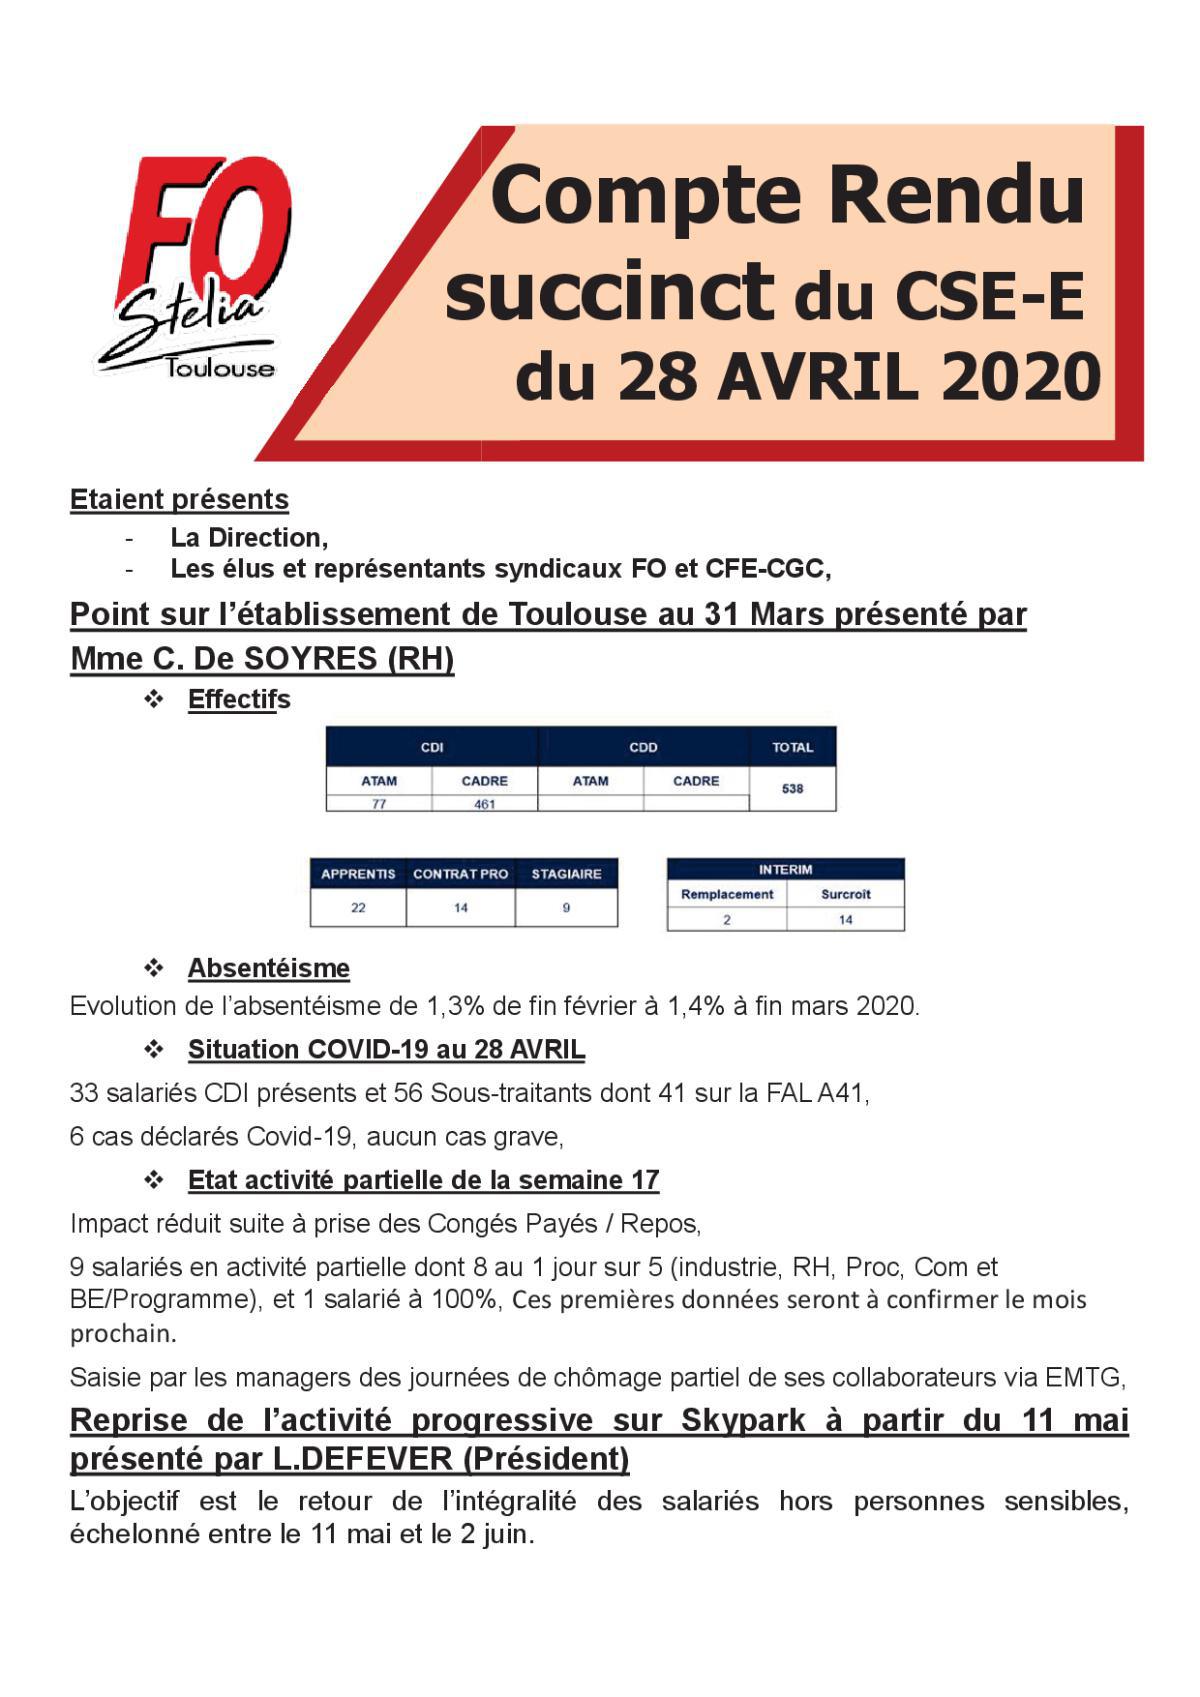 Flash Info : CR succinct du CSE-E du 28 avril 2020